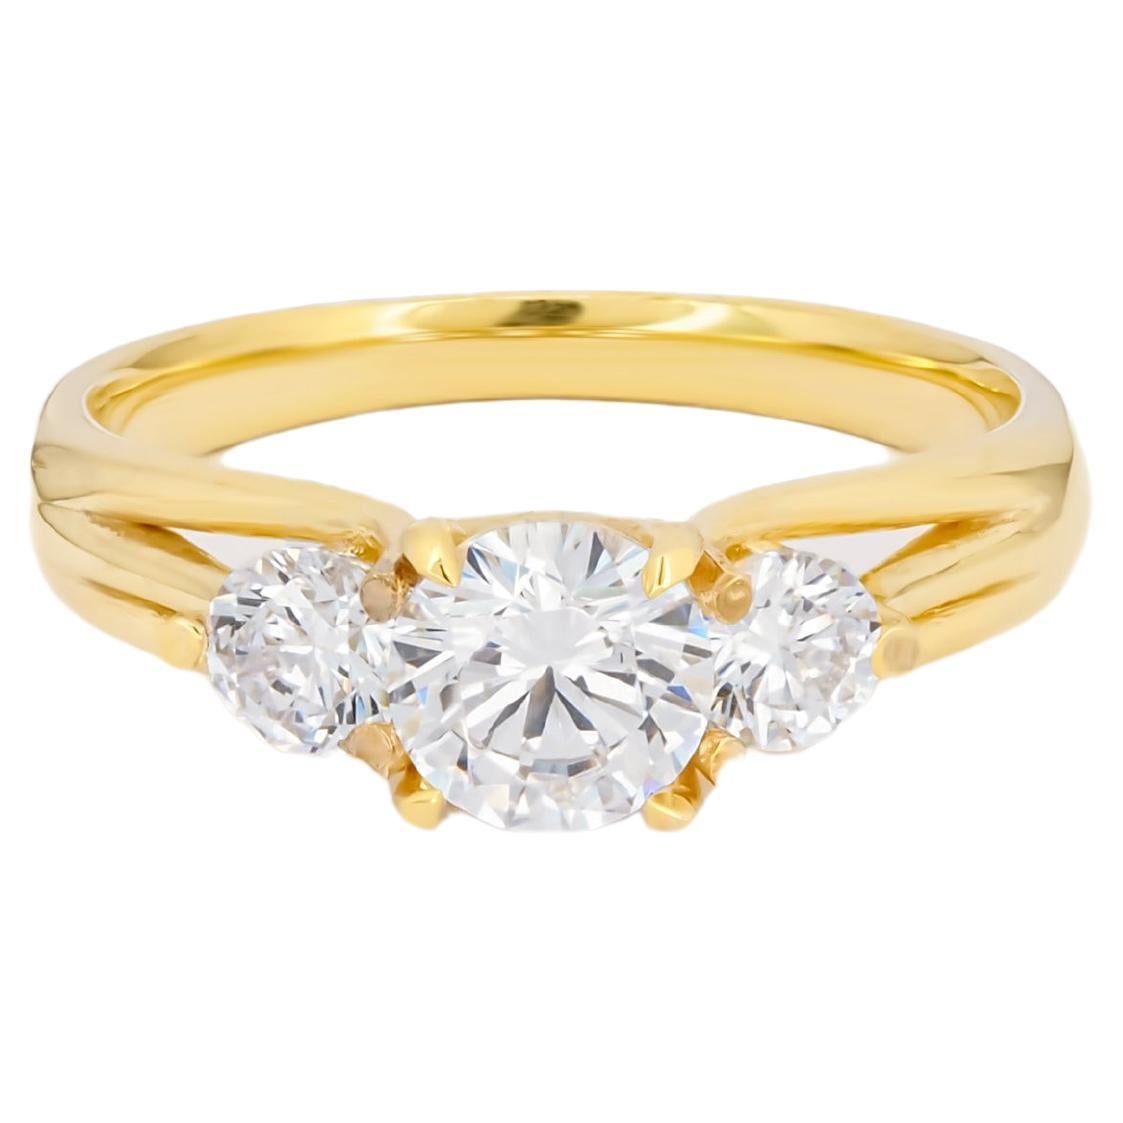 3 round moissanite 14k gold engagement ring. For Sale